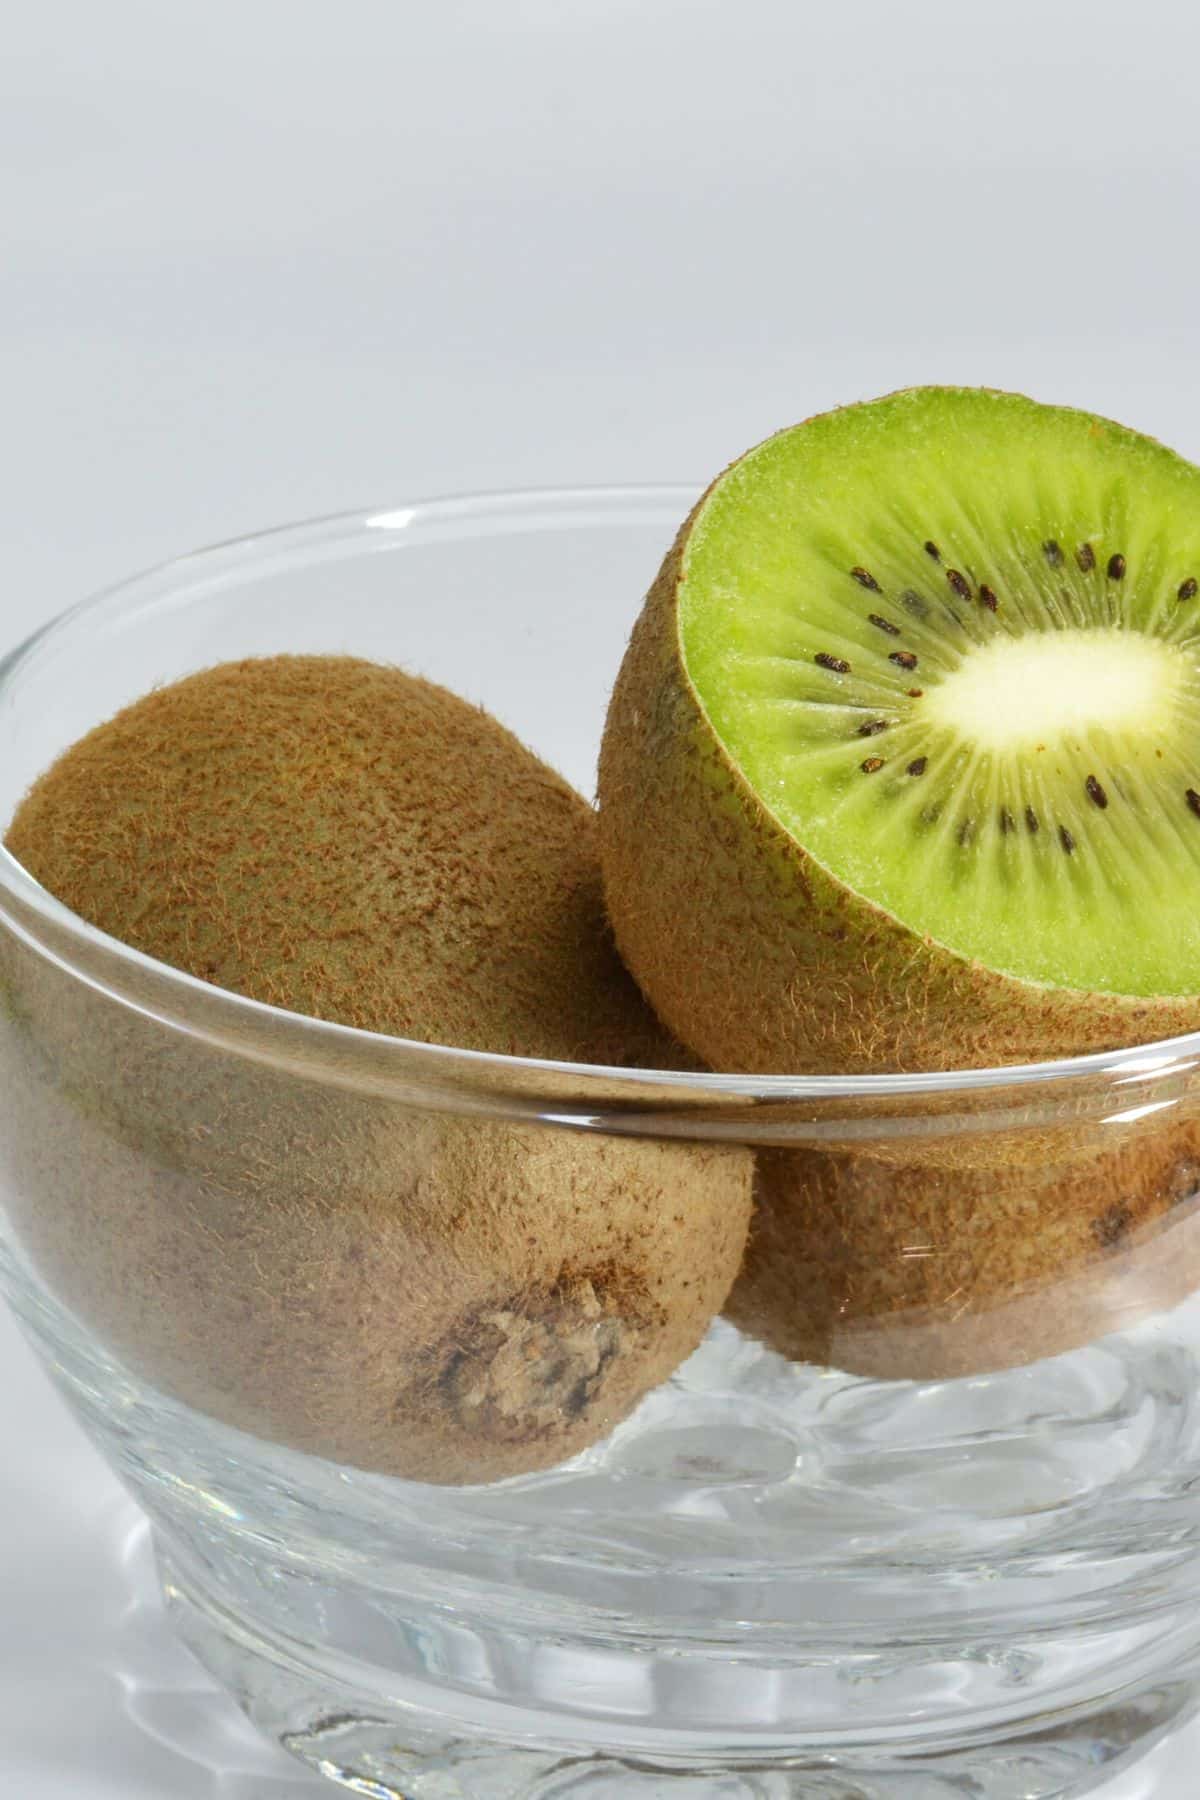 Fresh kiwi fruit in a small glass bowl.